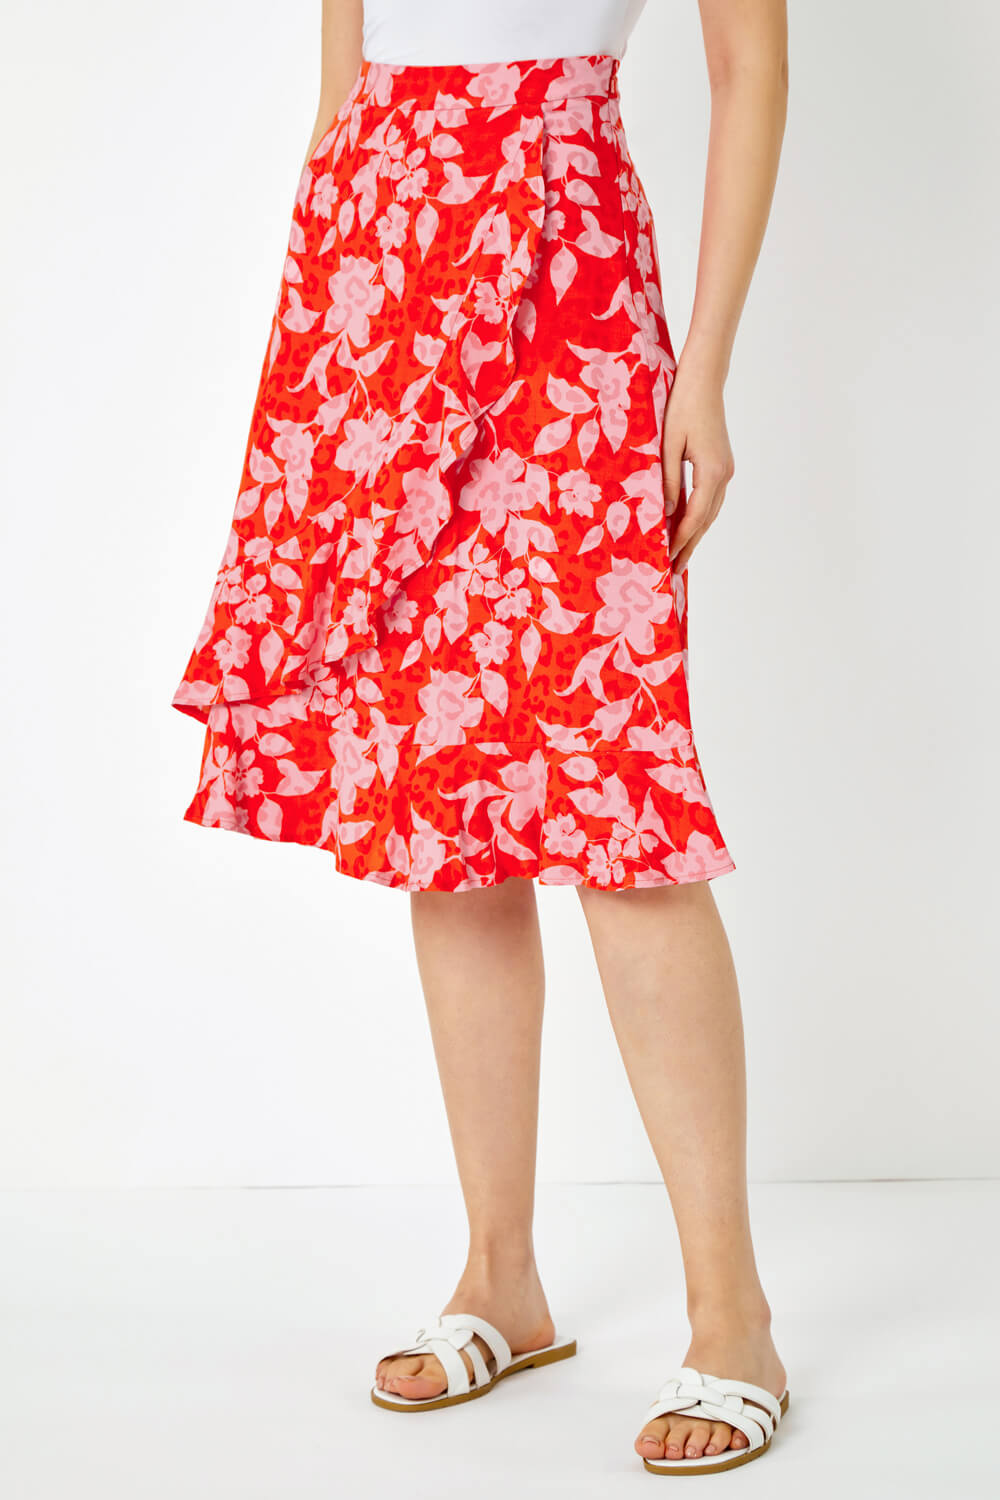 ORANGE Floral Frill Detail Wrap Skirt, Image 4 of 5